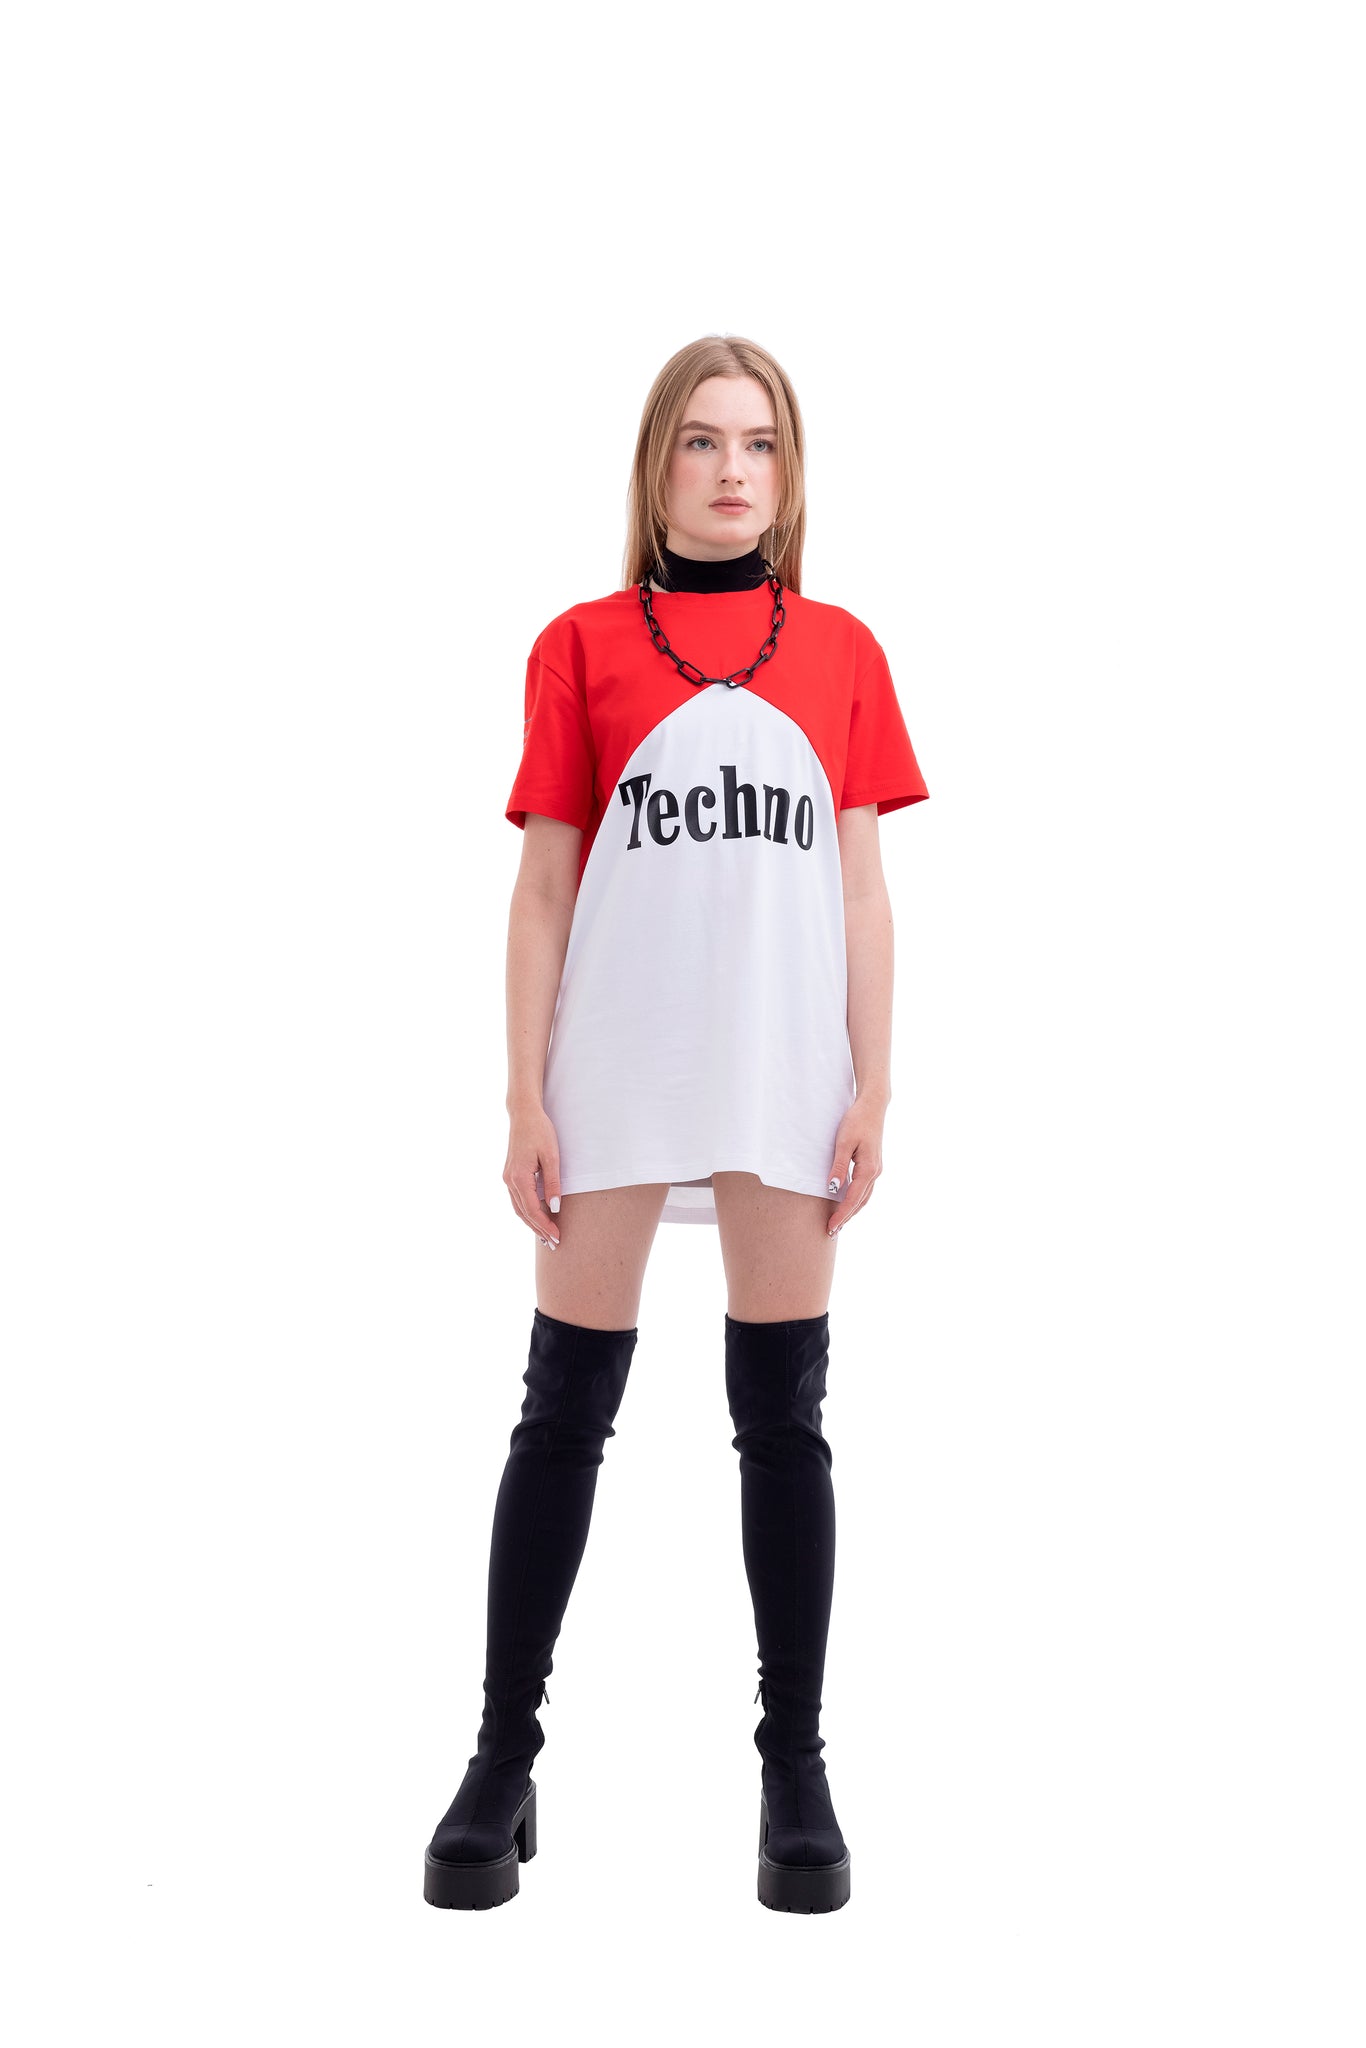 Techno Heals Oversized Unisex cotton T-shirt